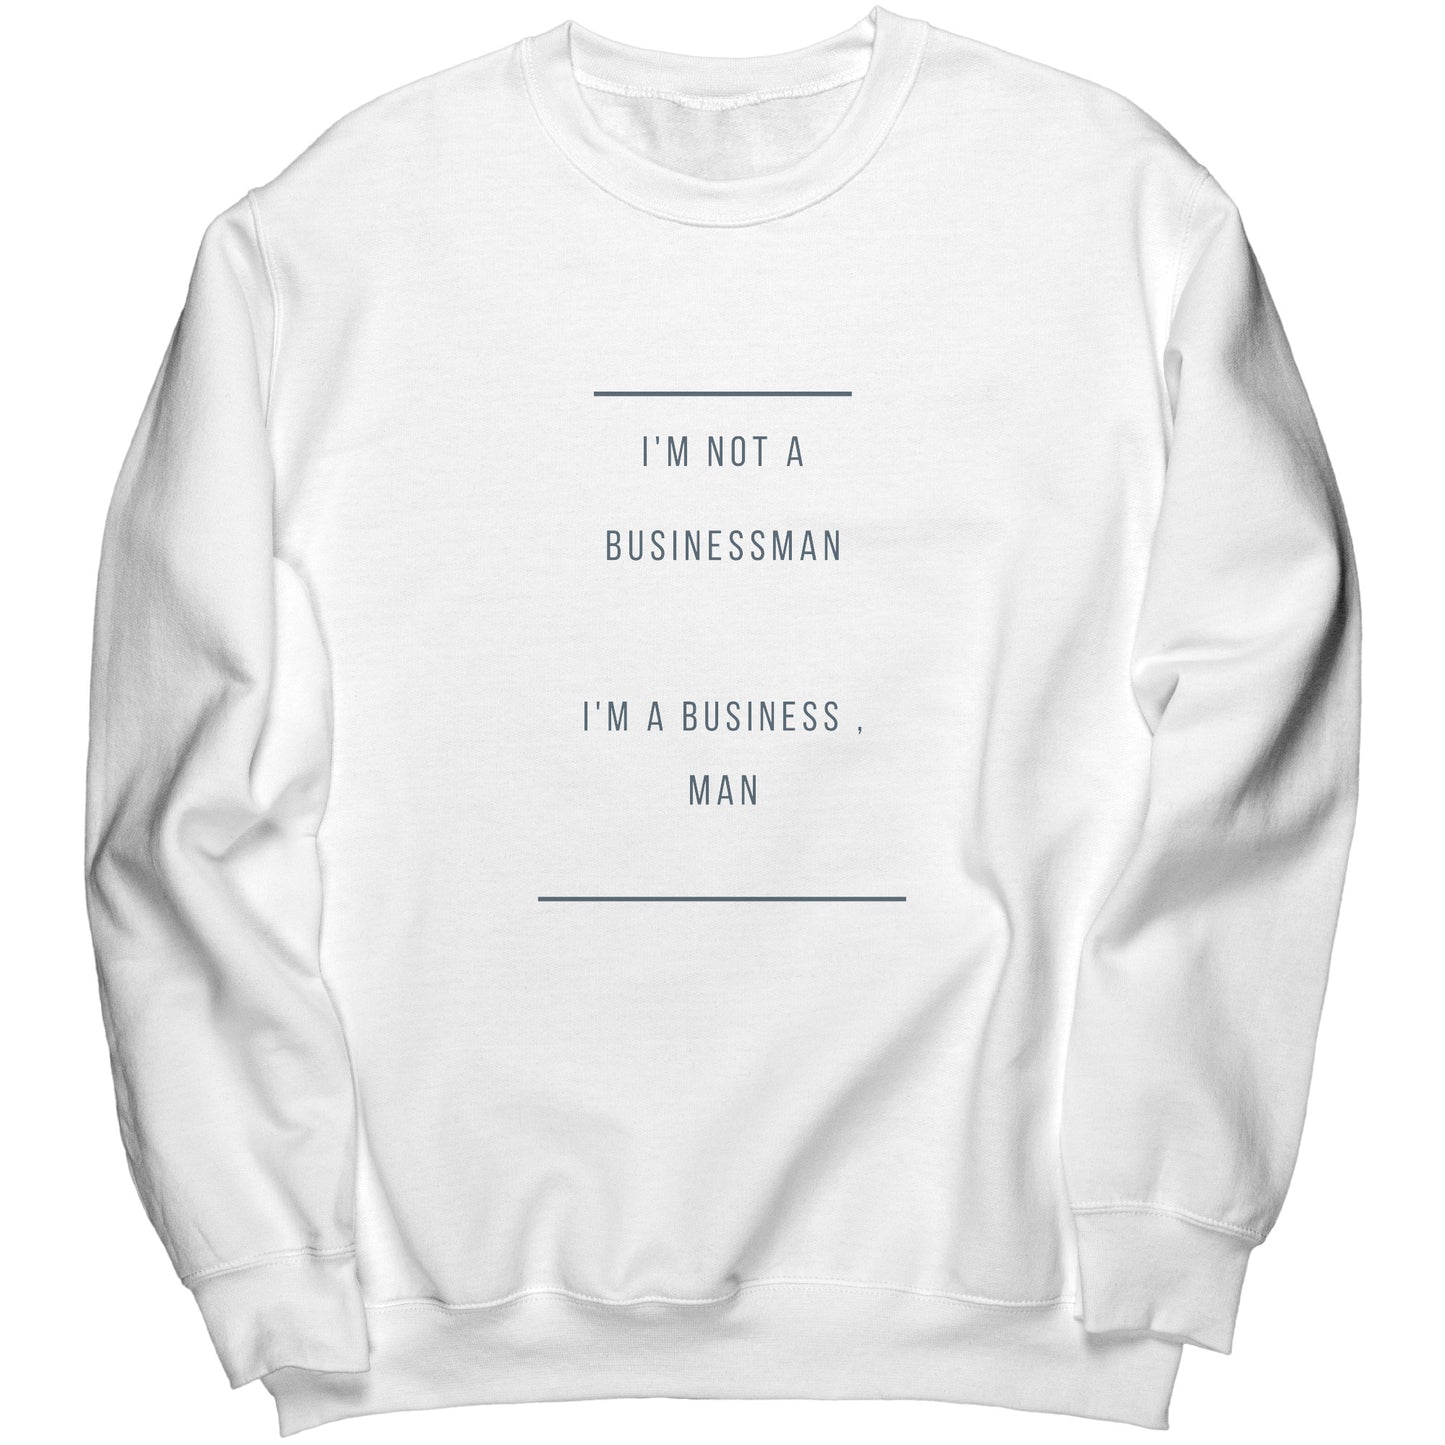 "I'm a business , man" -  Premium Long Sweatshirt